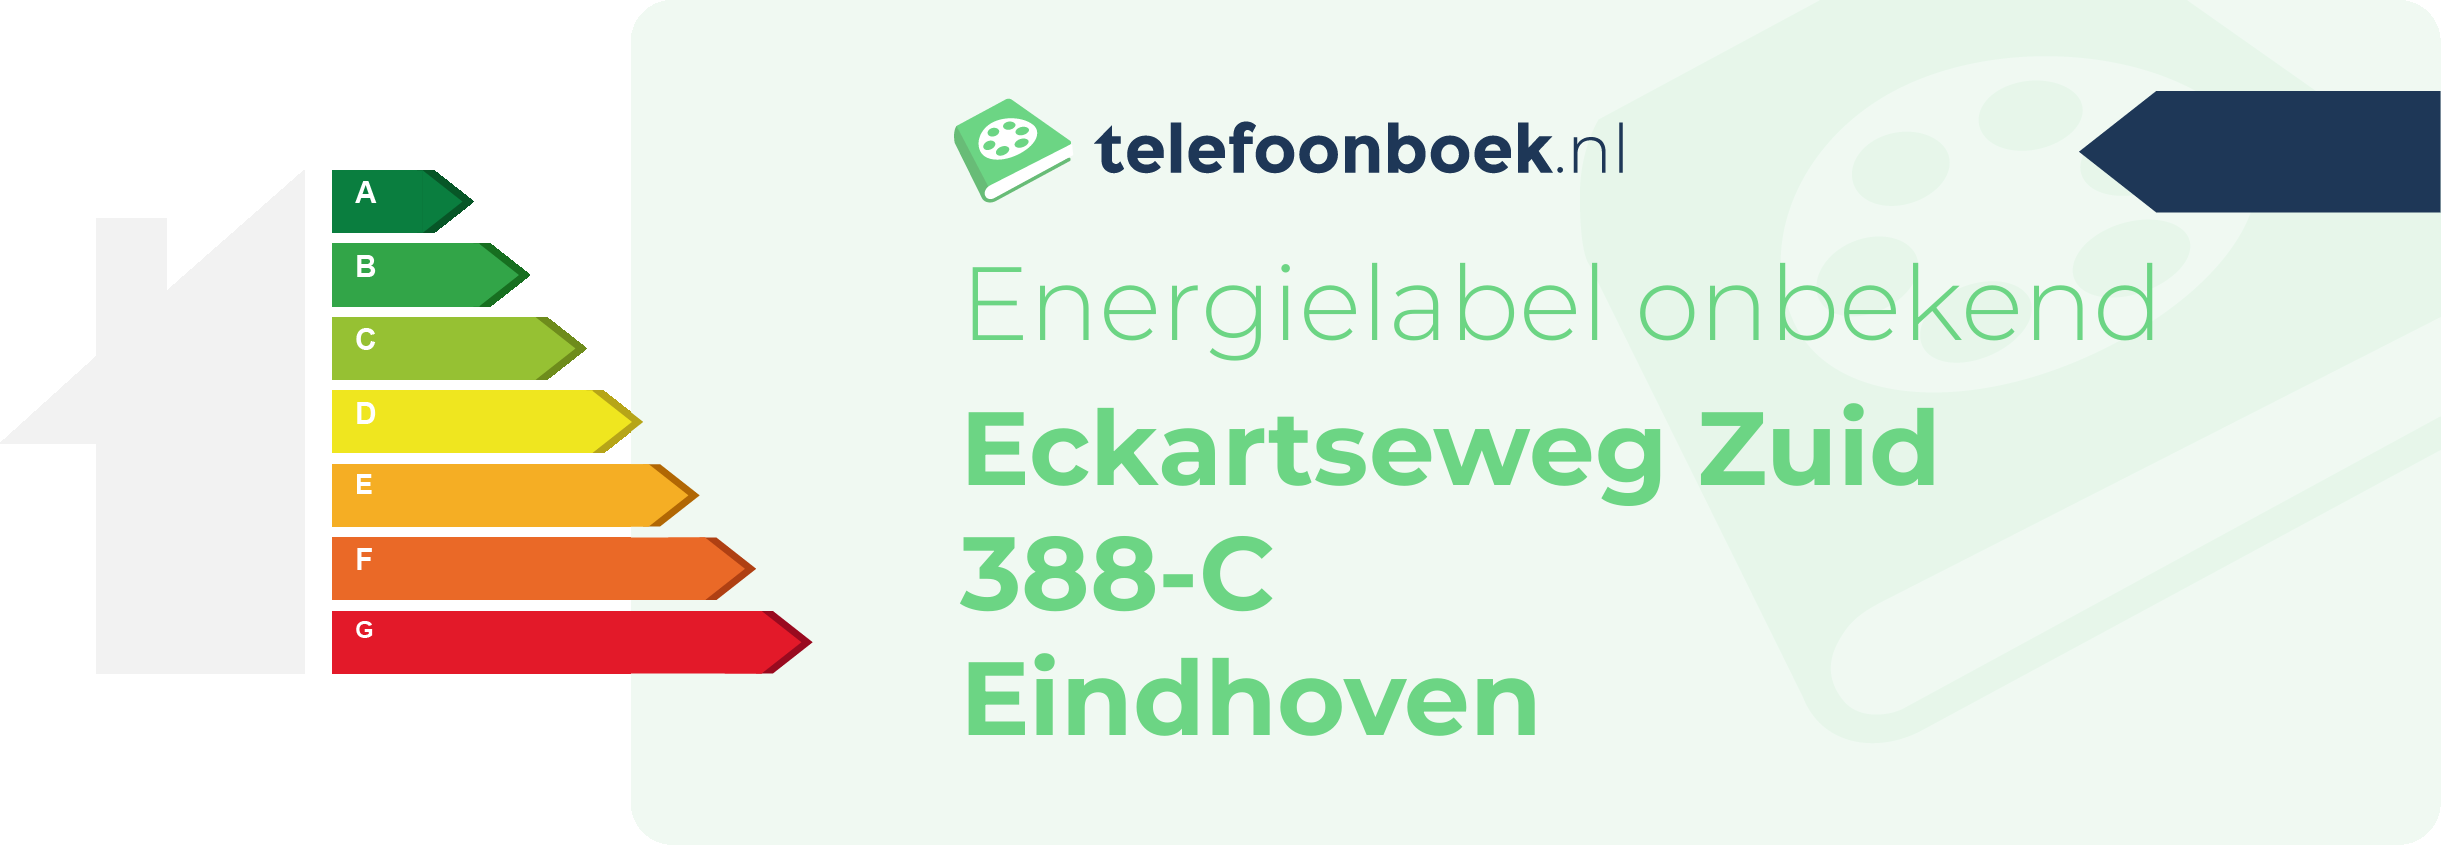 Energielabel Eckartseweg Zuid 388-C Eindhoven